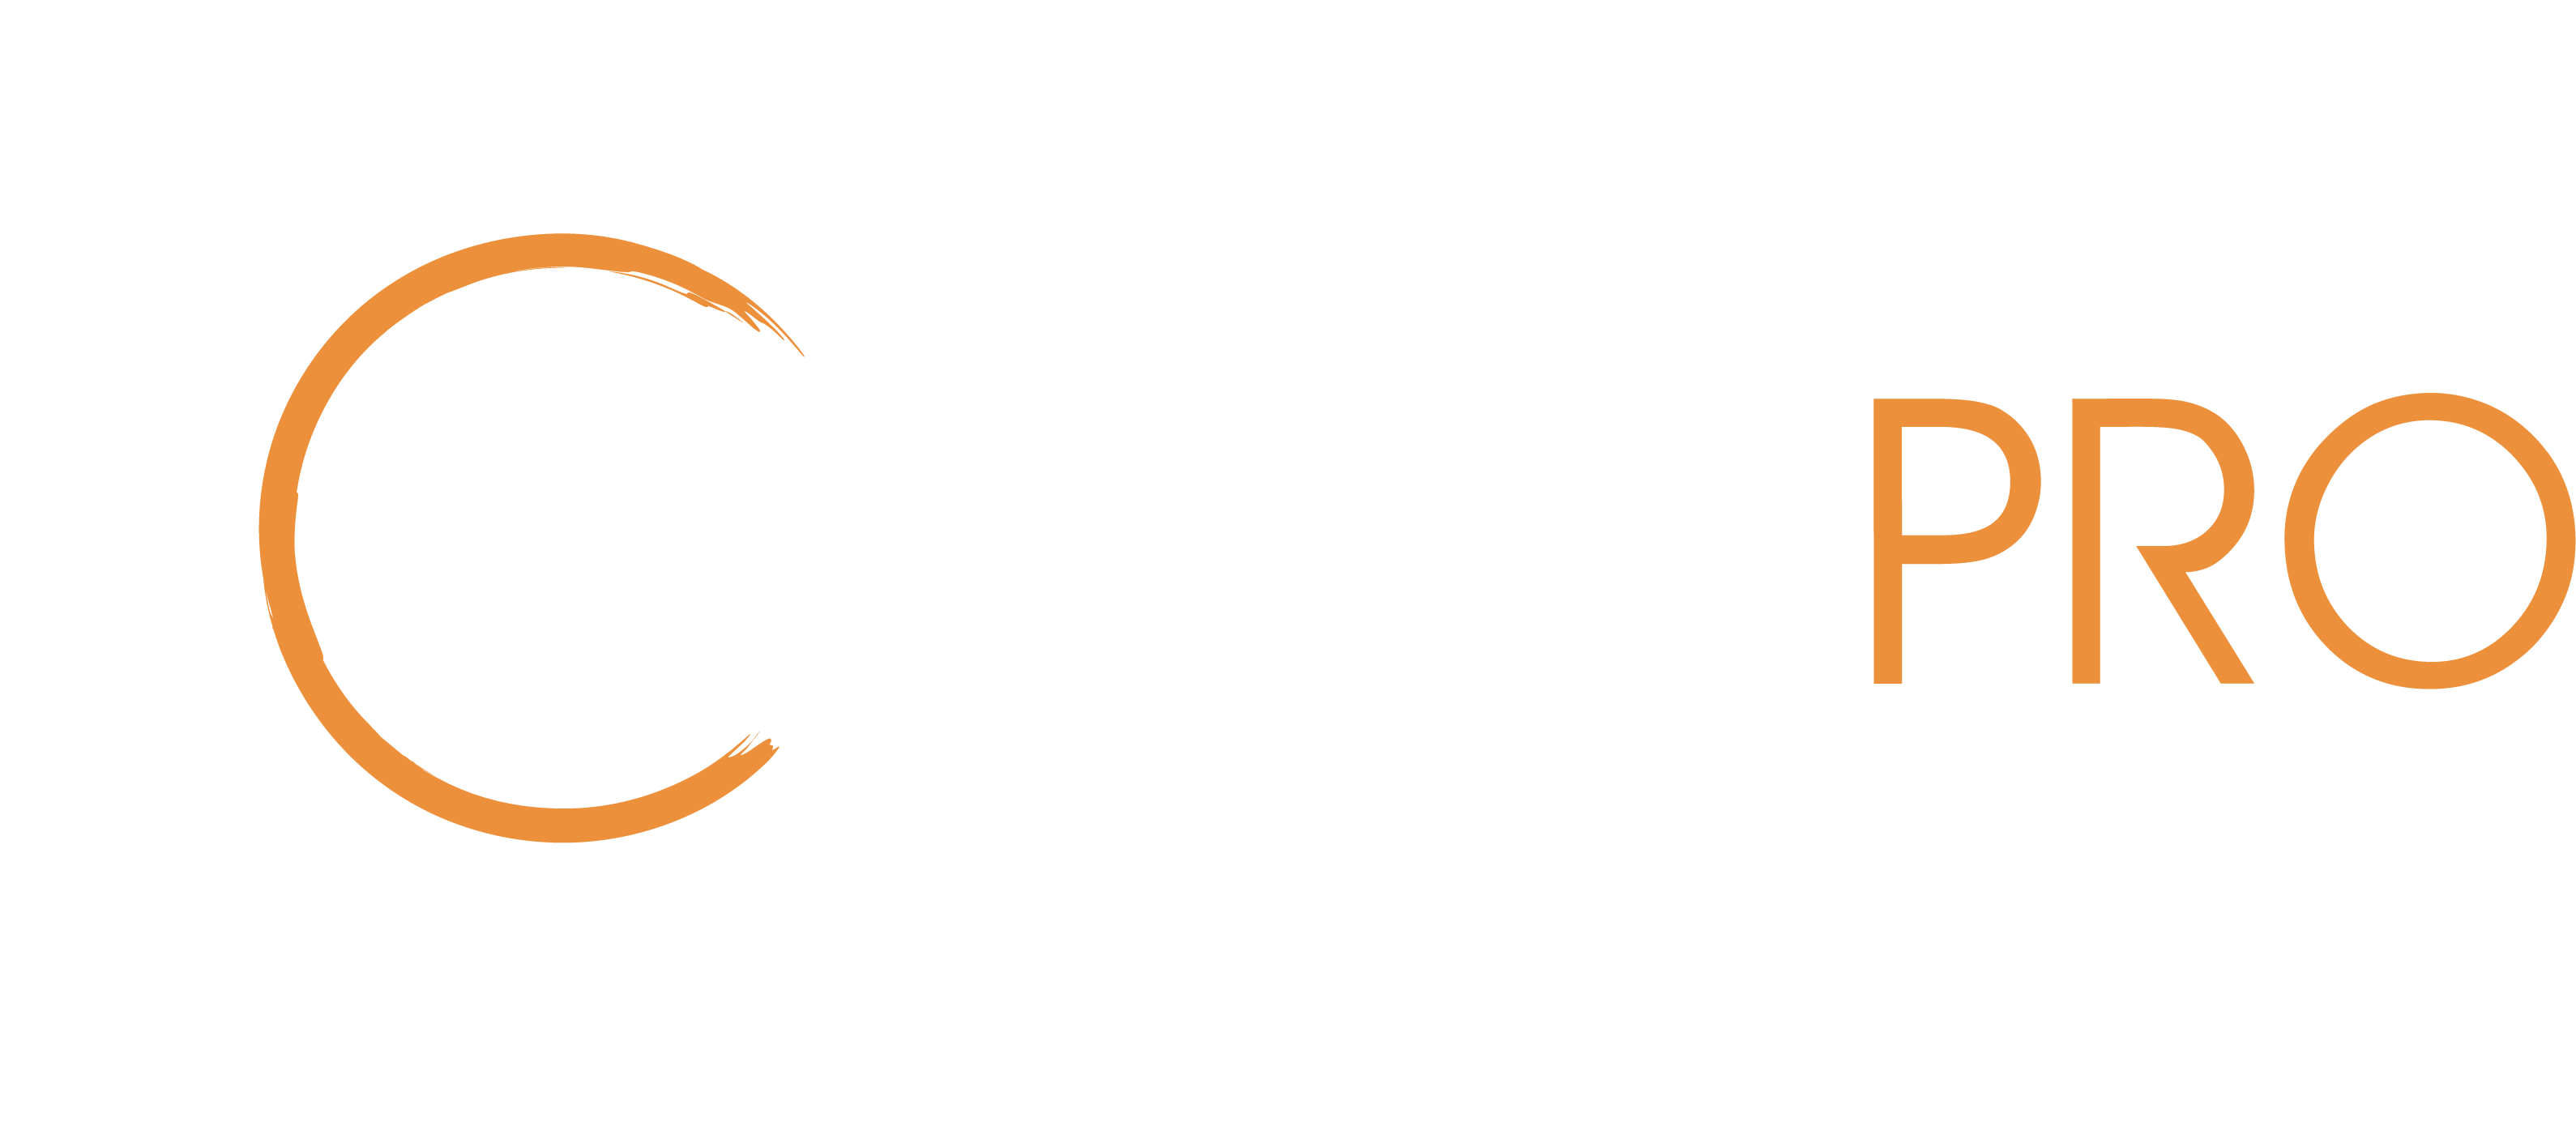 Online-Pro GmbH-